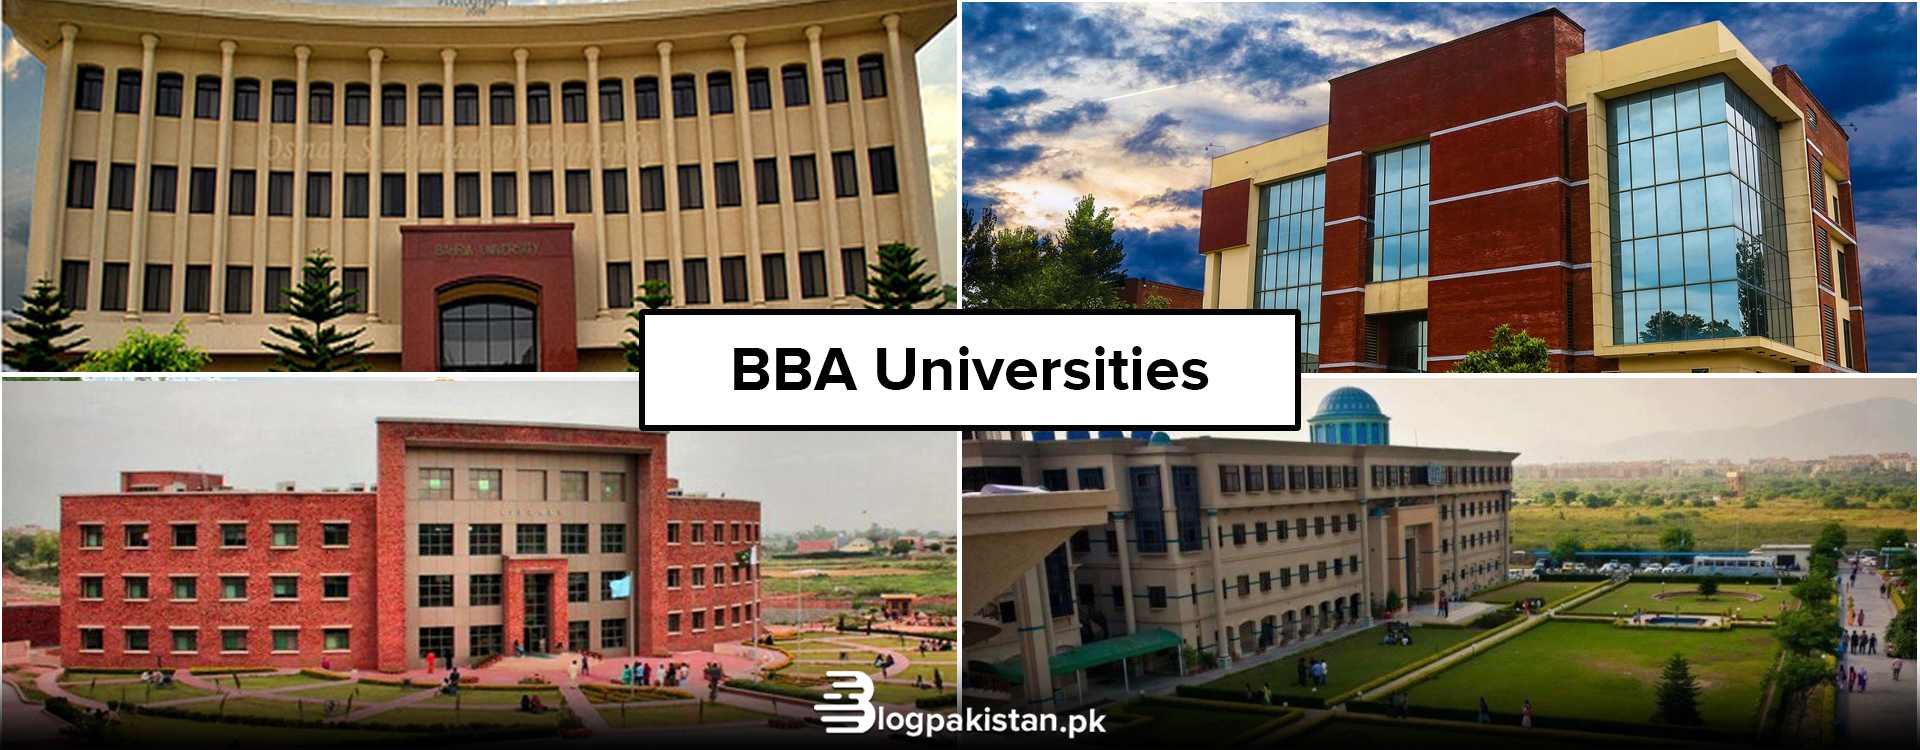 Universities offering bba in islamabad and rawalpindi